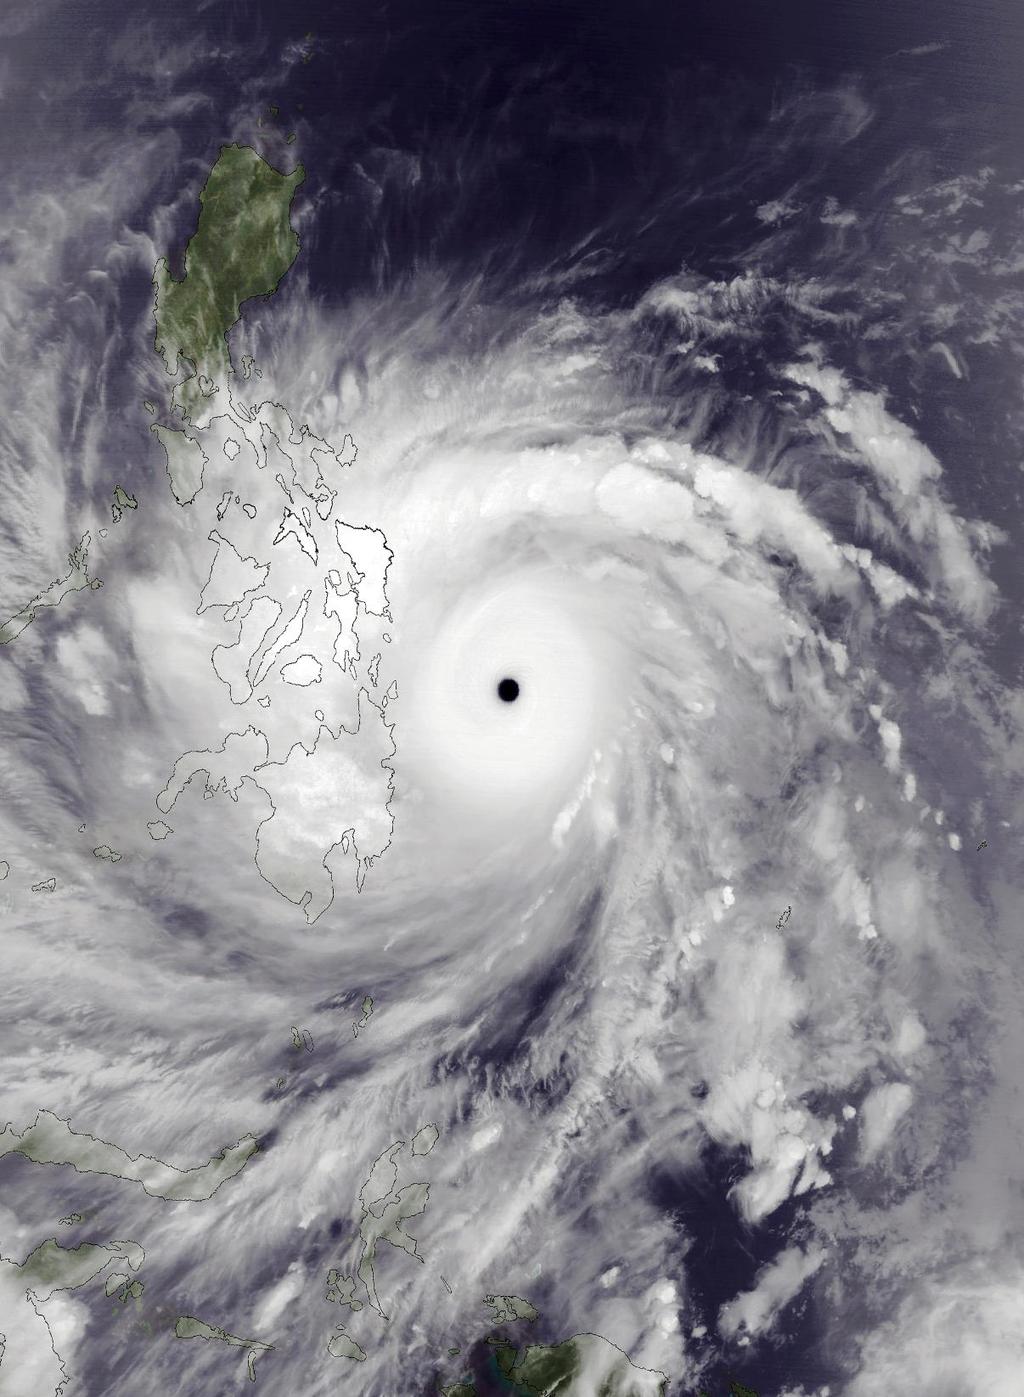 On November 8, 2013, Typhoon Yolanda (Haiyan) hit the Philippines left a